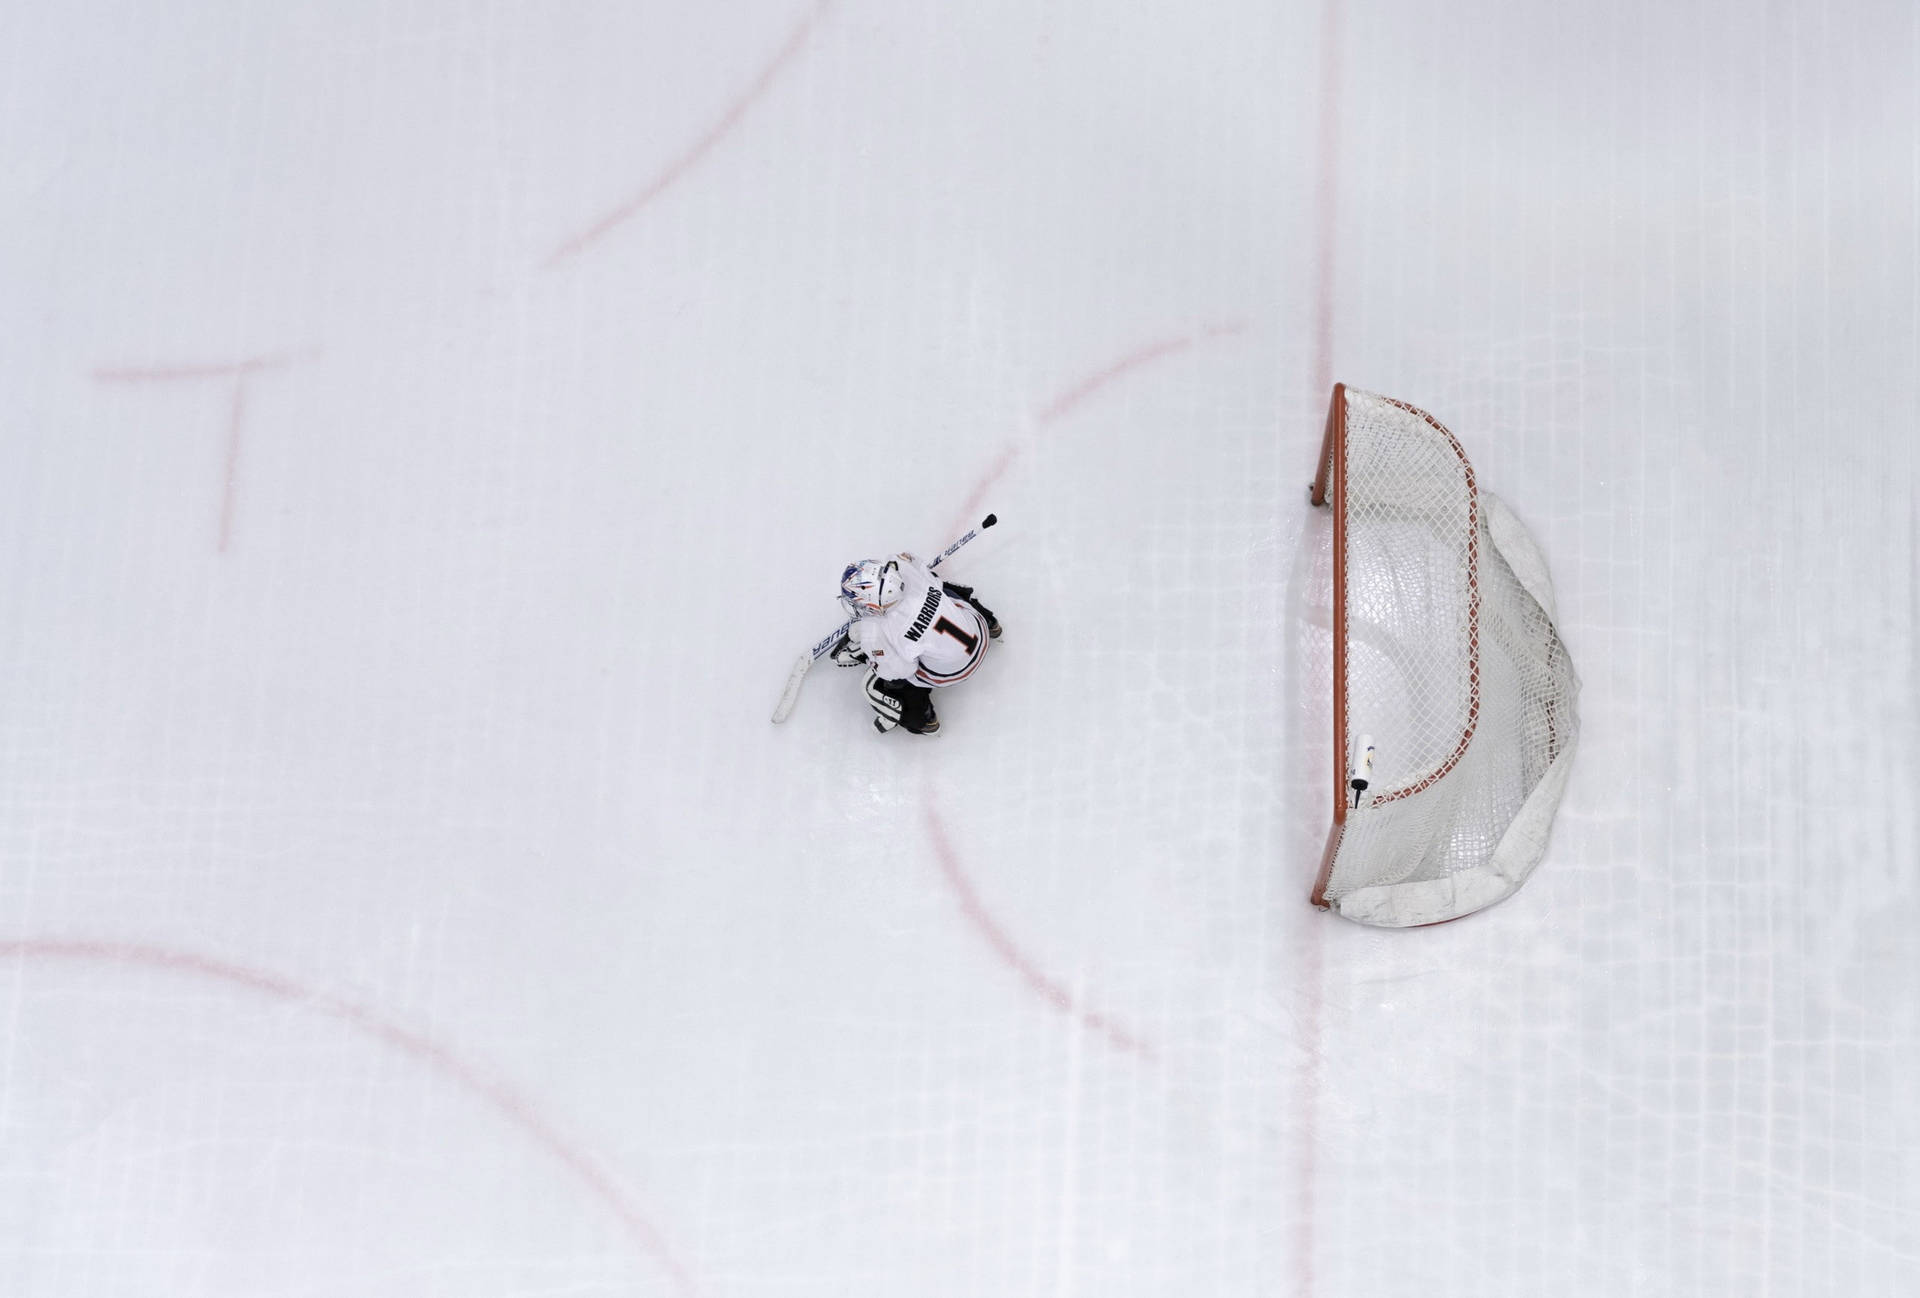 Ice Hockey Professional Goal Tender Background